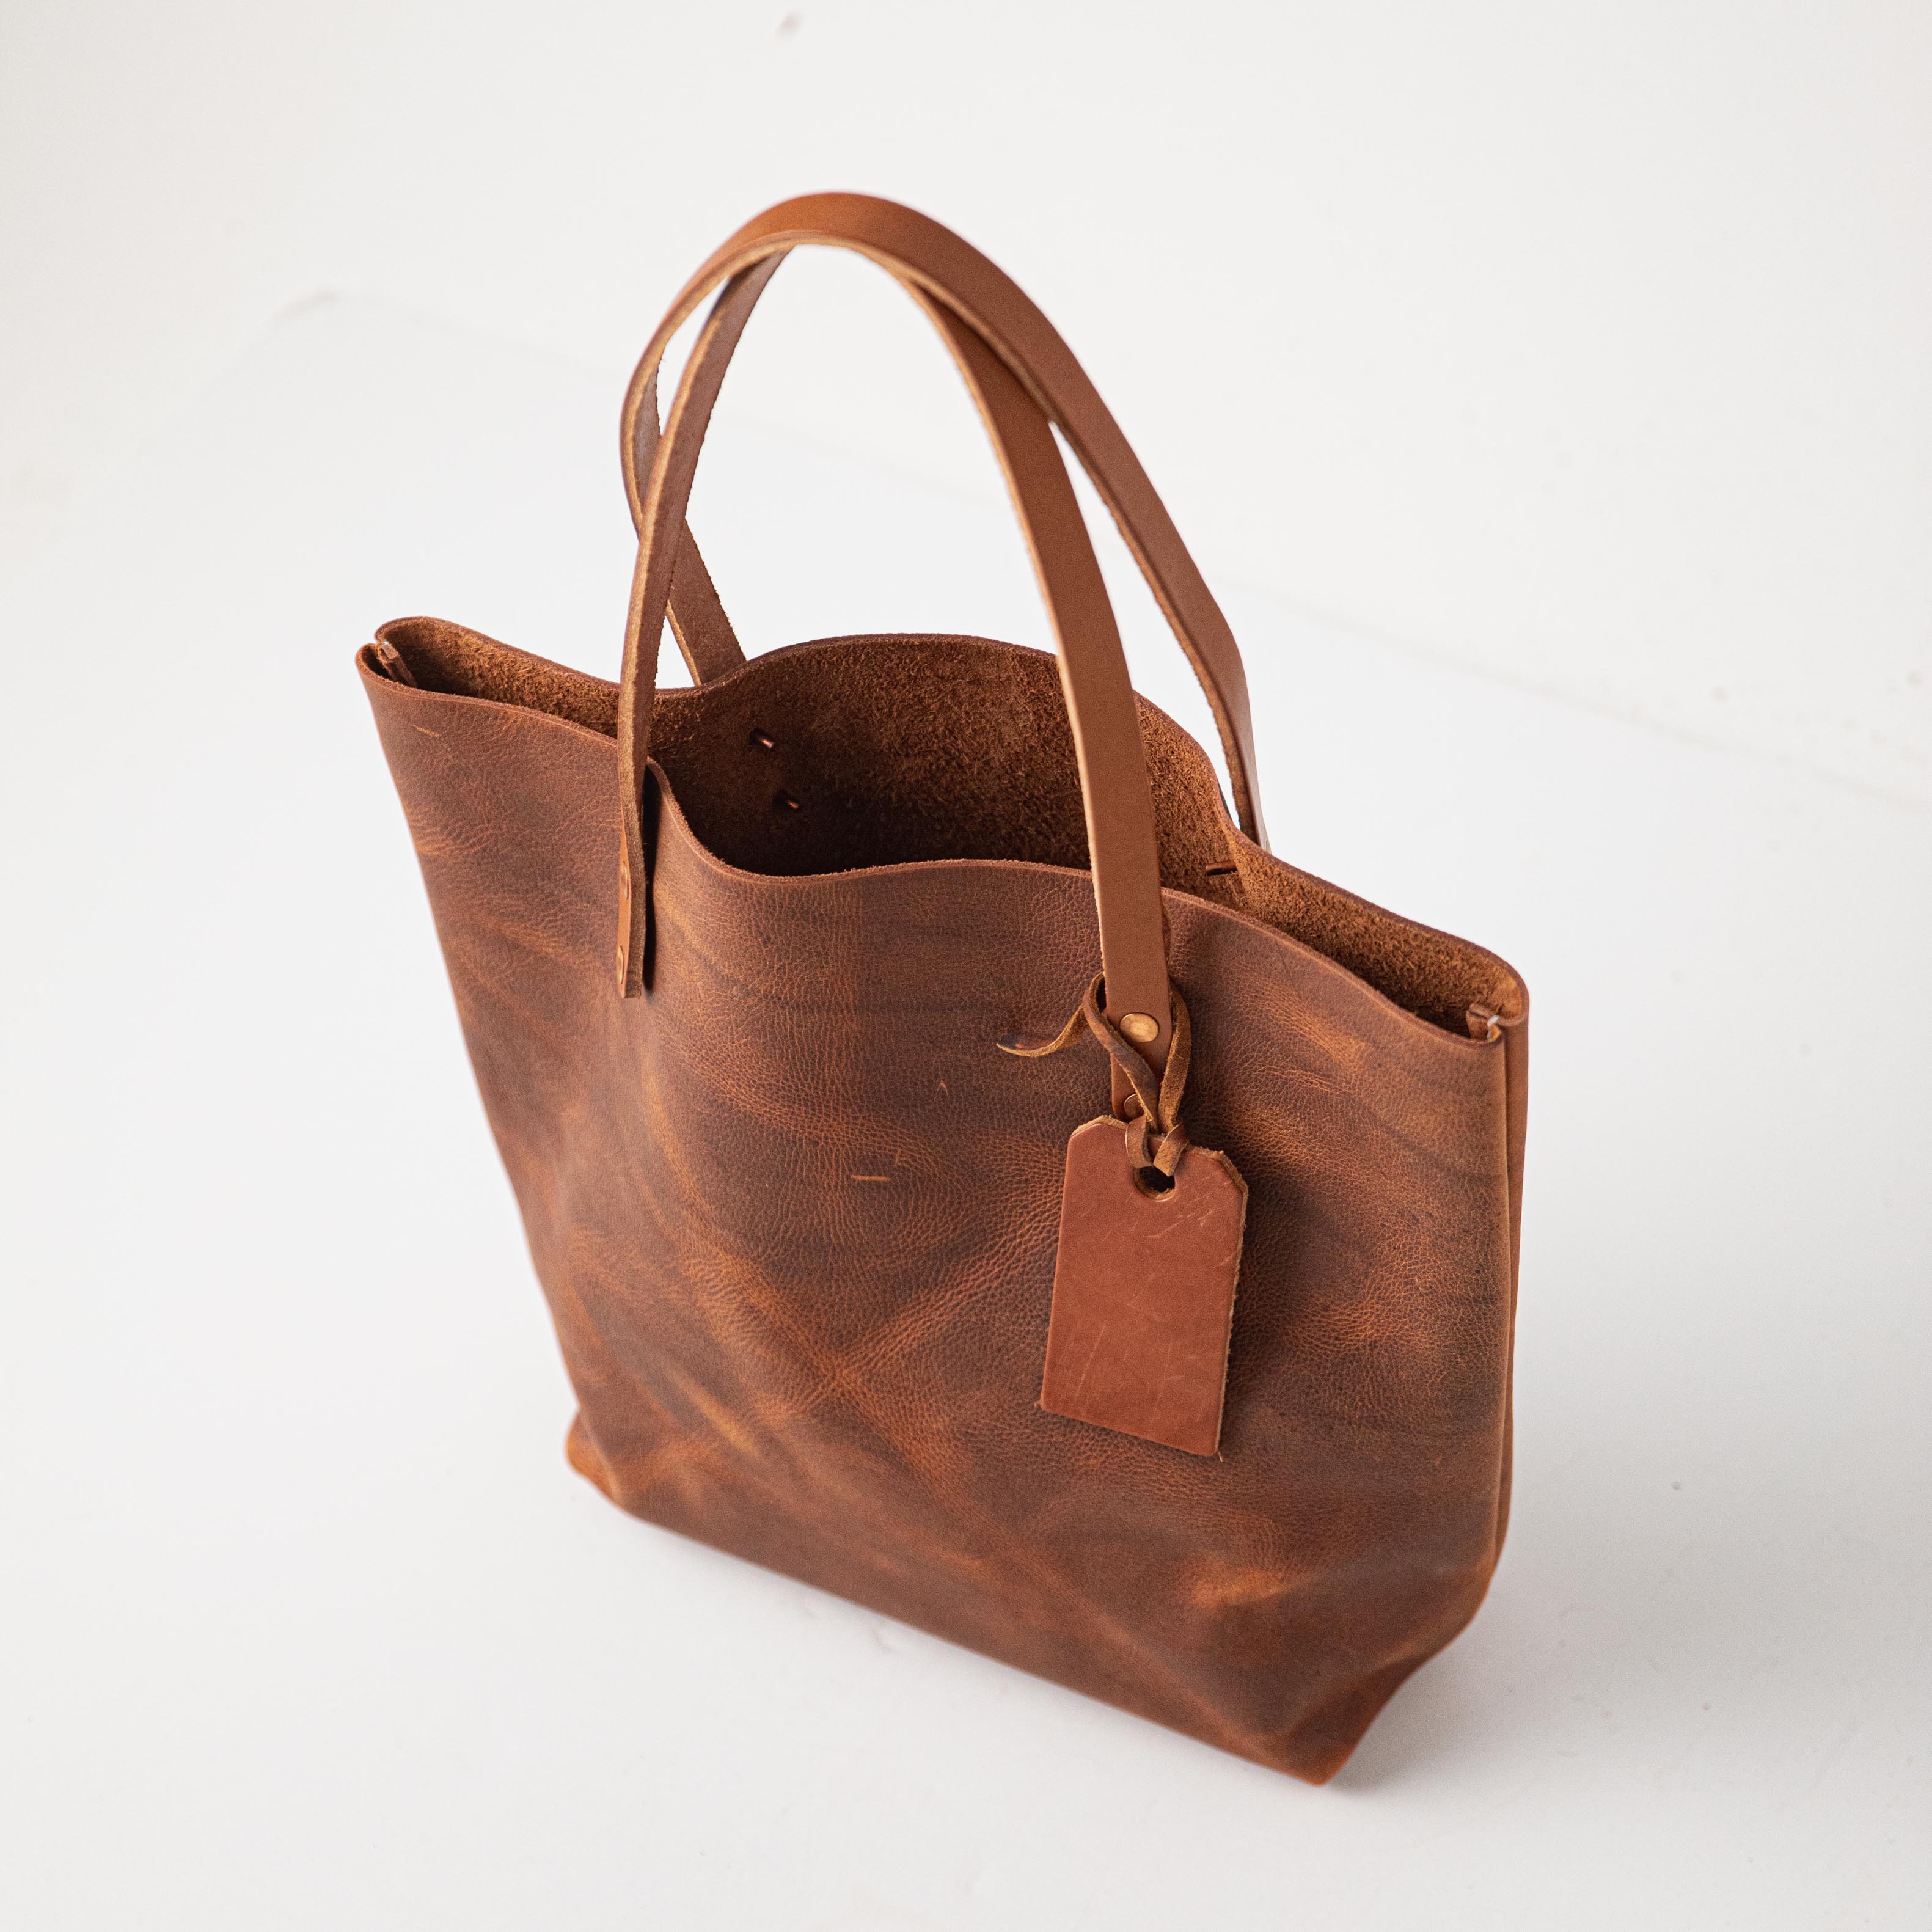 Tan Kodiak Tote- tan leather bag handmade in America